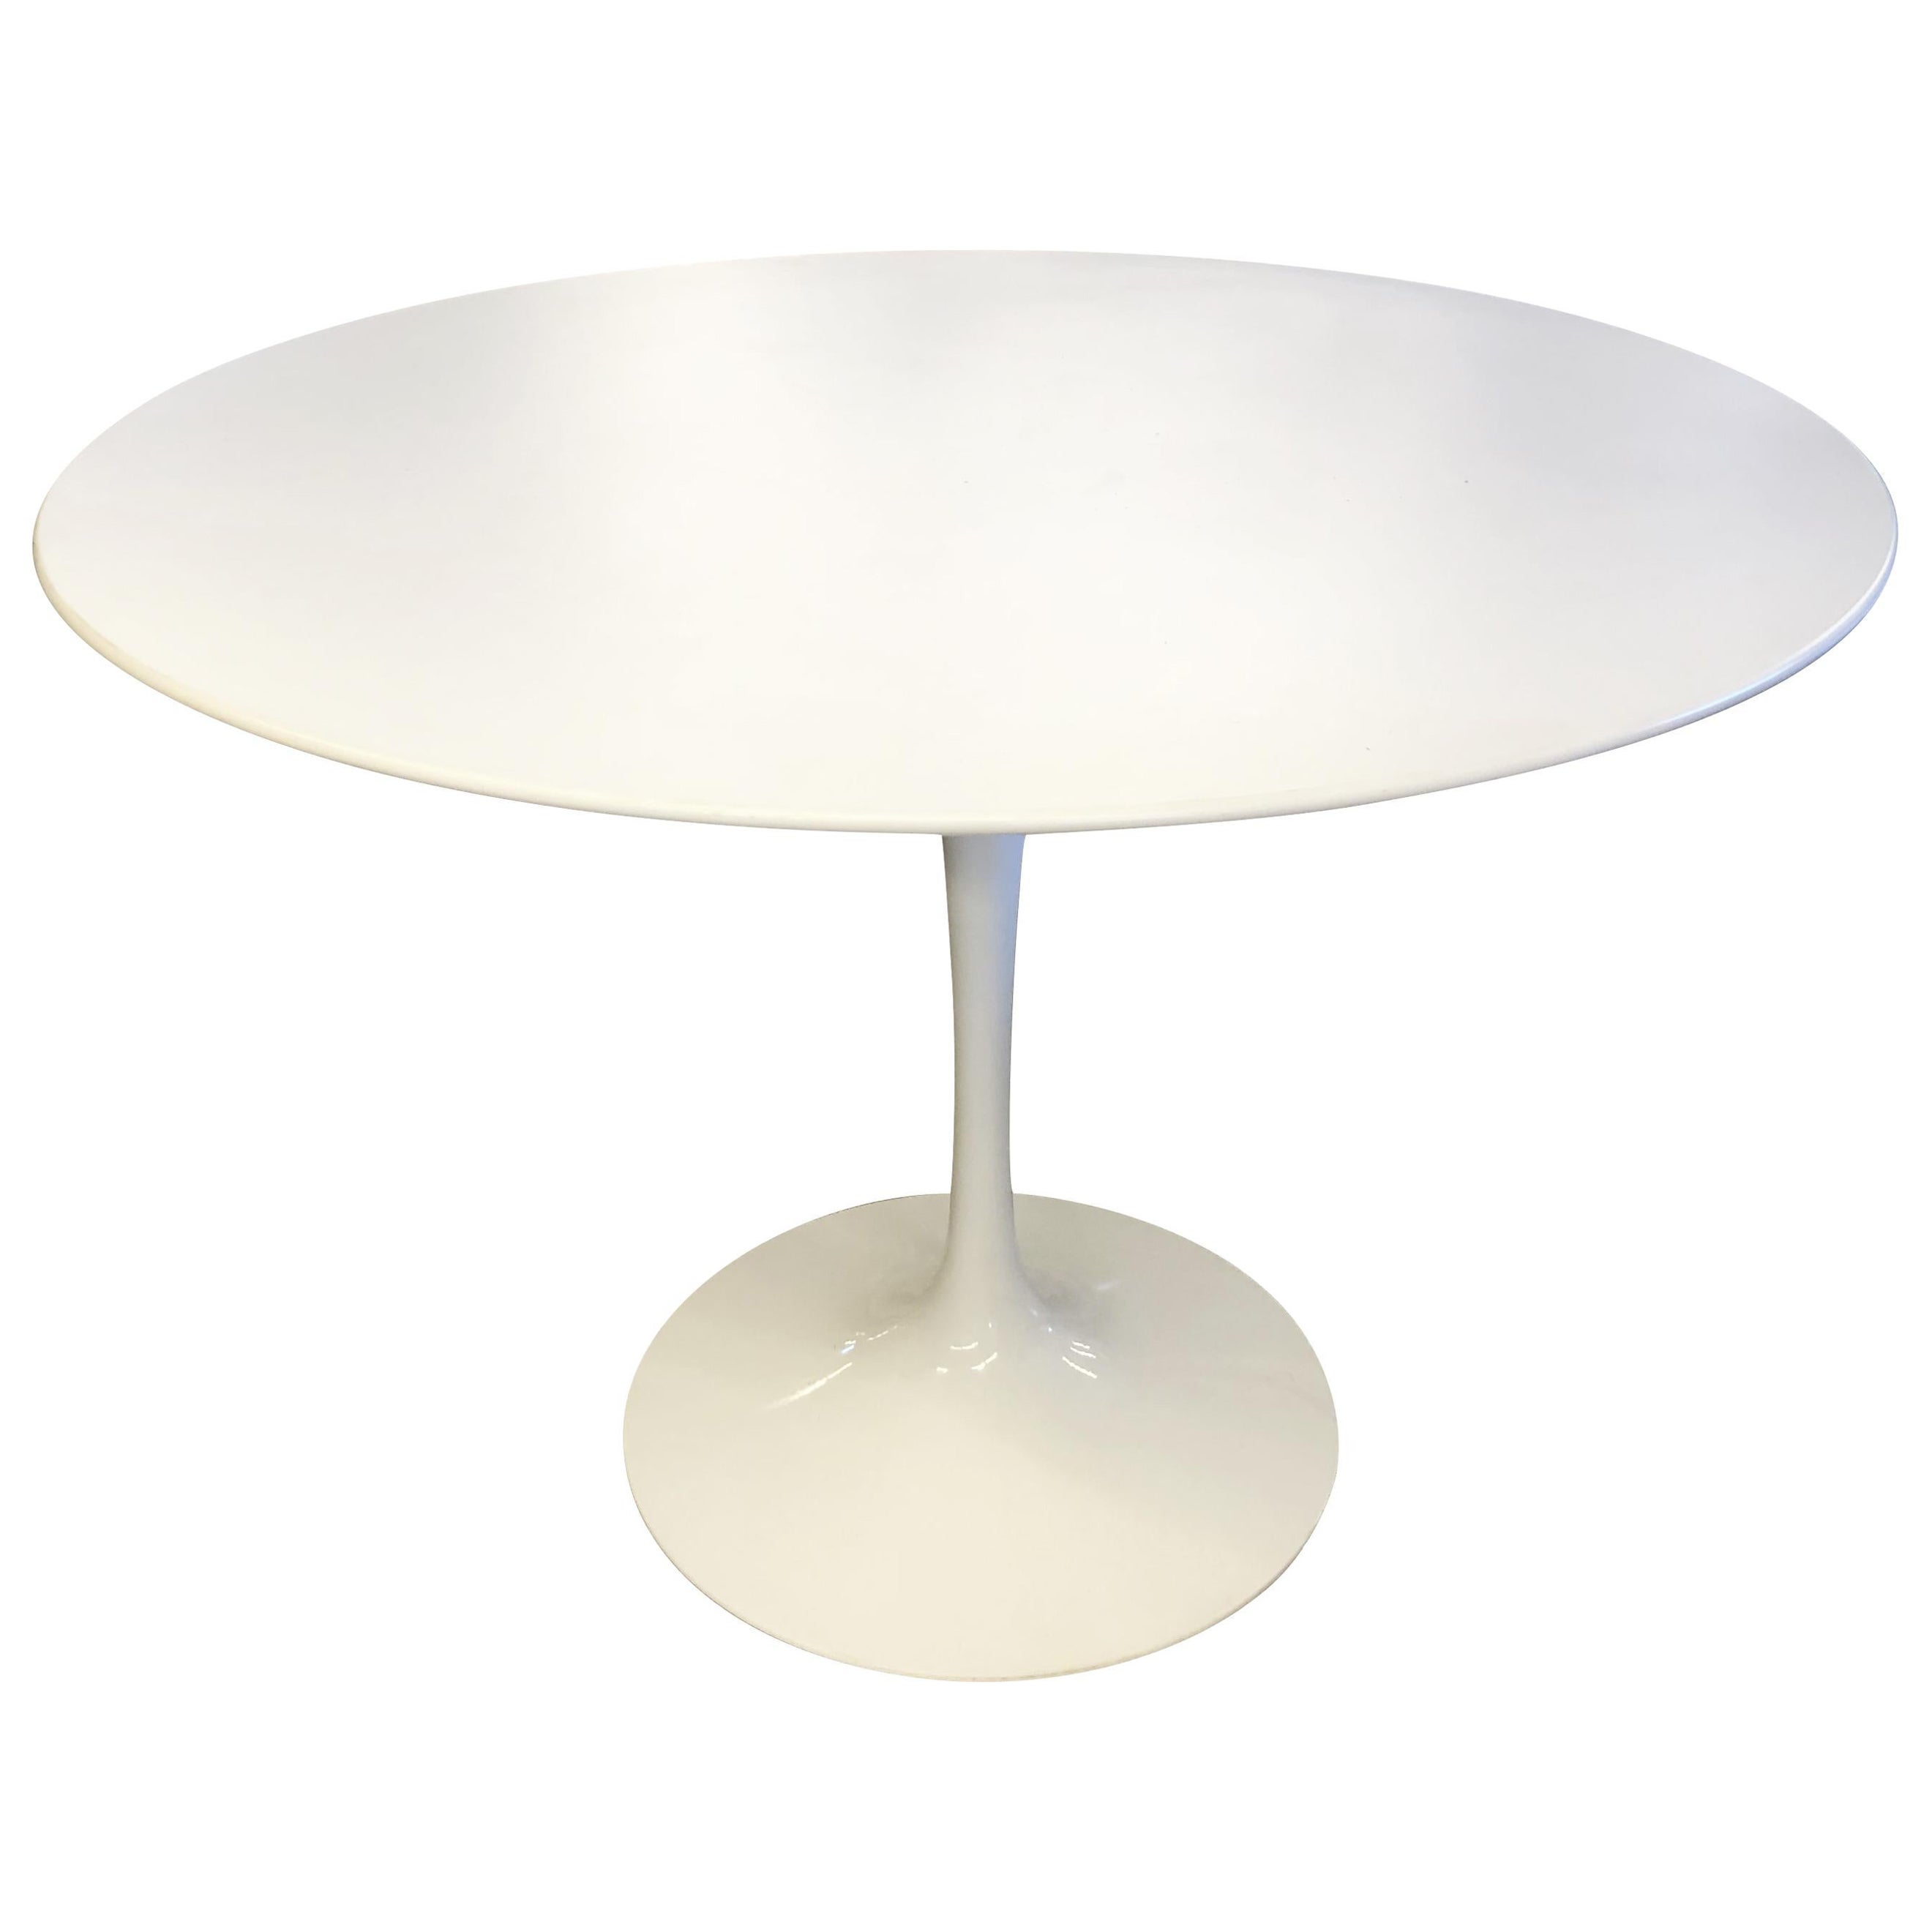 Original Knoll Eero Saarinen 42" Pedestal Table